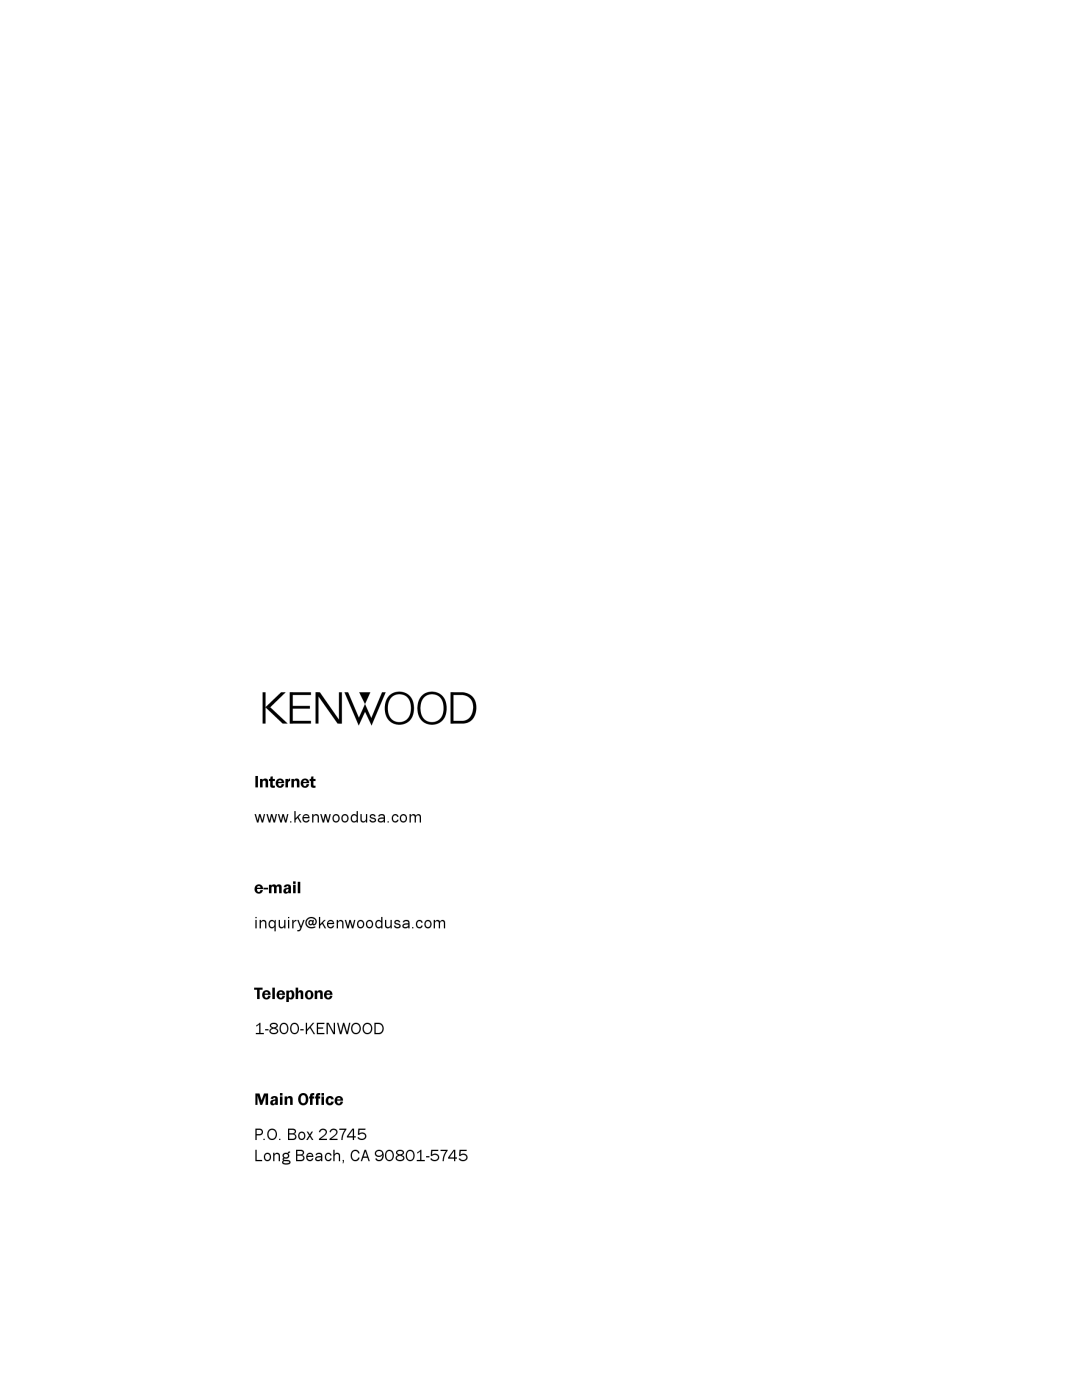 Kenwood REMOTE PORTAL AXCESS manual Internet, e-mail inquiry@kenwoodusa.com Telephone 1-800-KENWOOD Main Office 